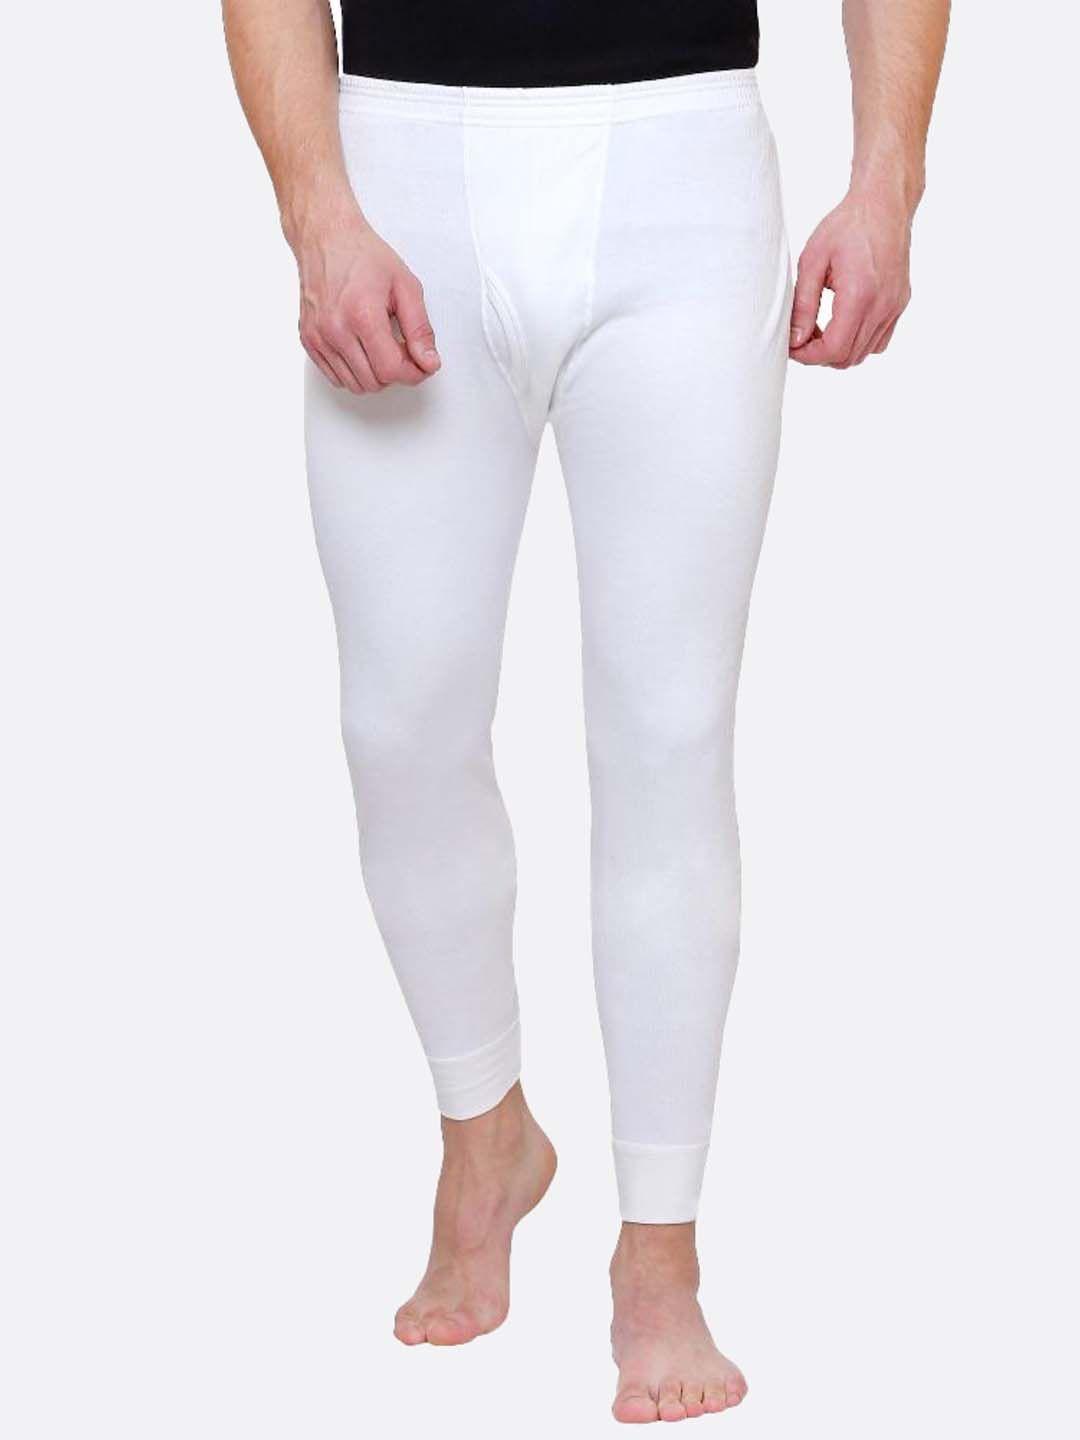 bodycare-insider-men-plus-size-off-white-cotton-thermal-bottoms